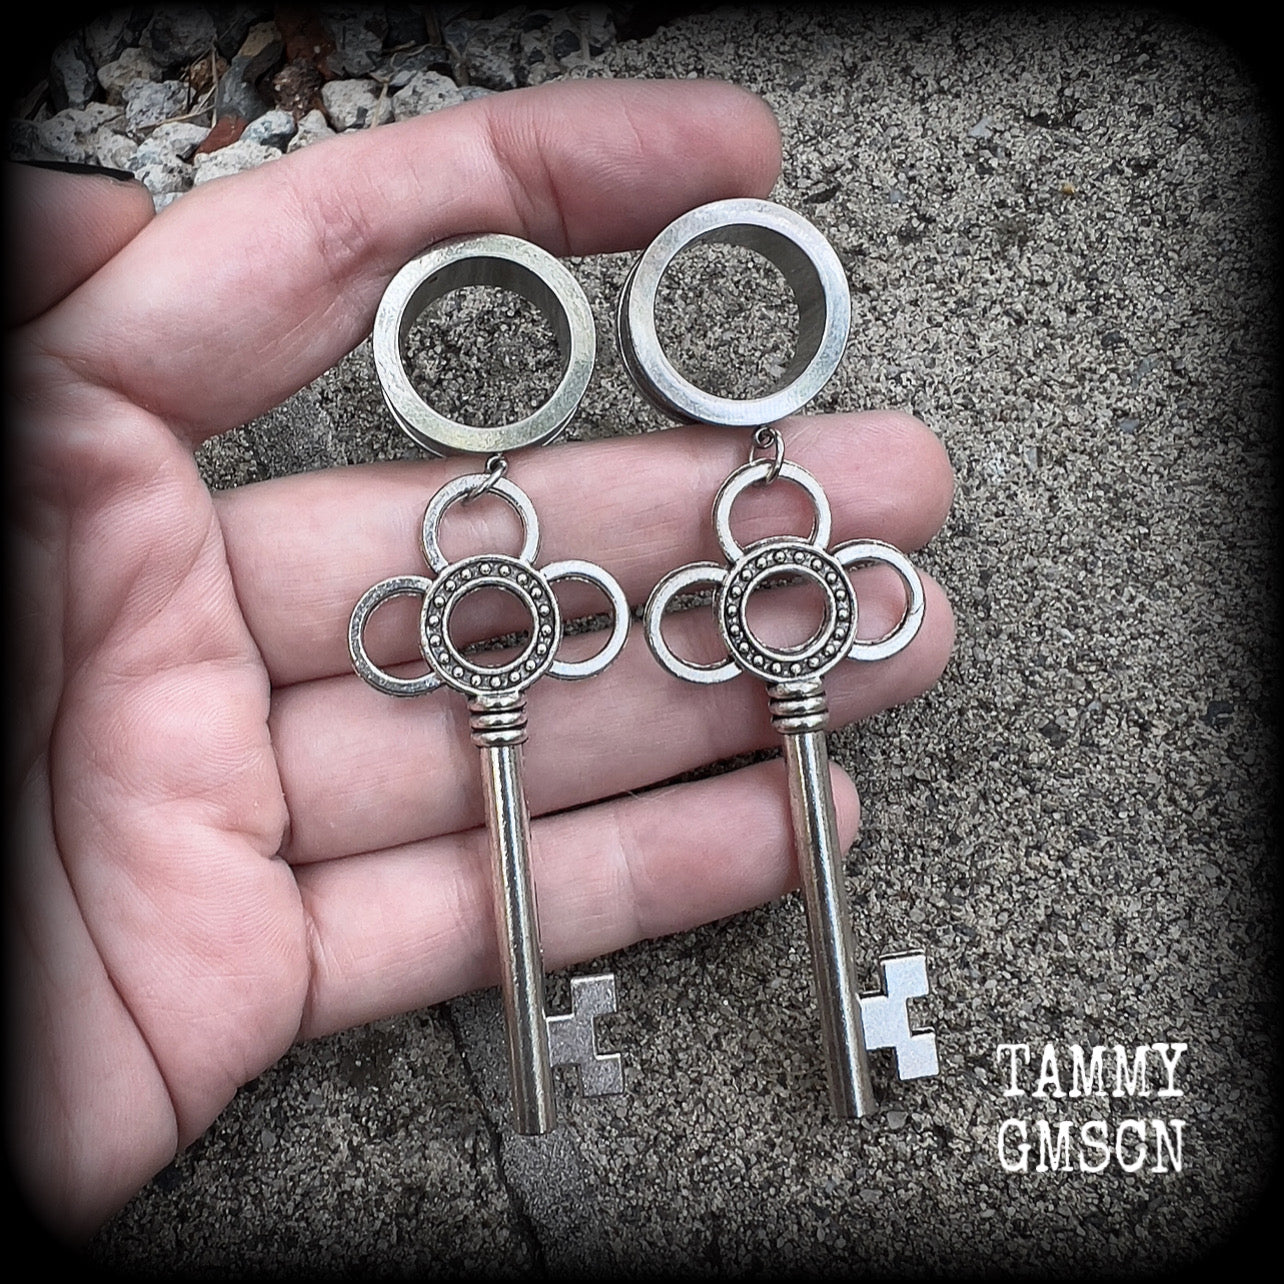 Large Antique silver key tunnel earrings